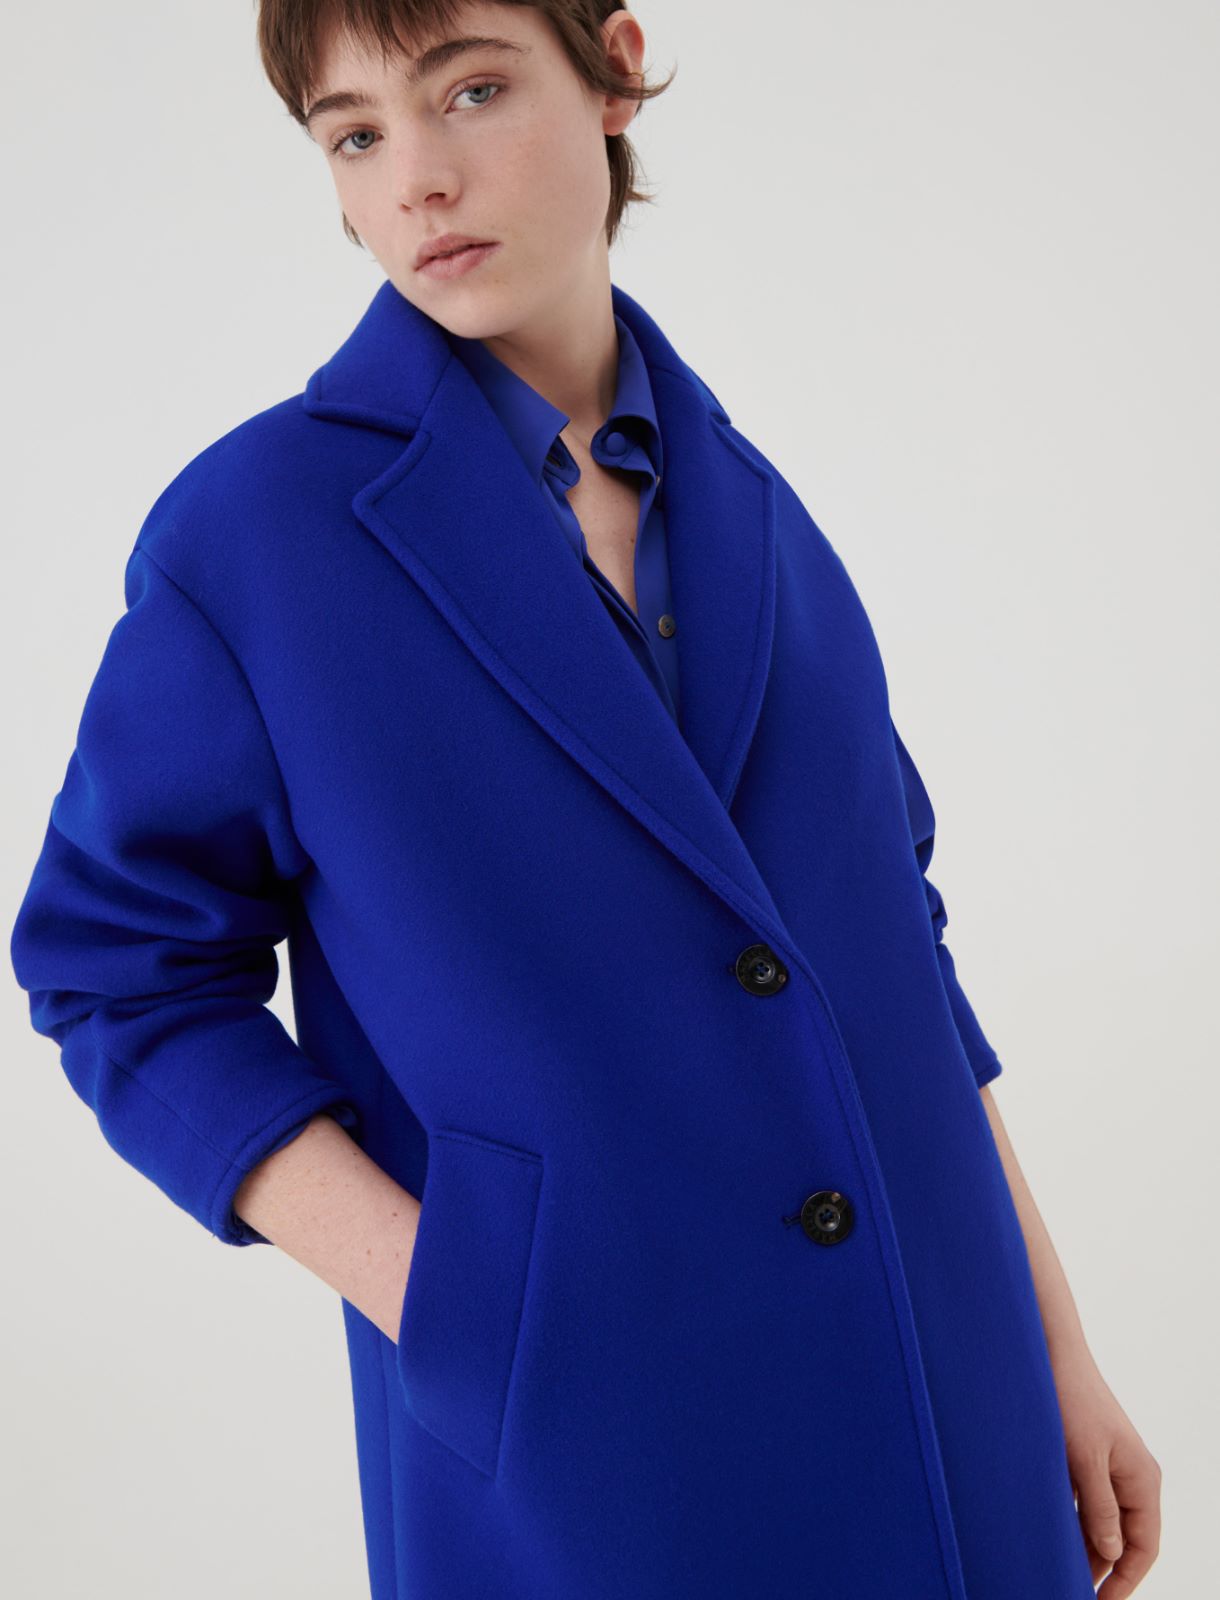 Manteau en drap - Bleuet - Marella - 3